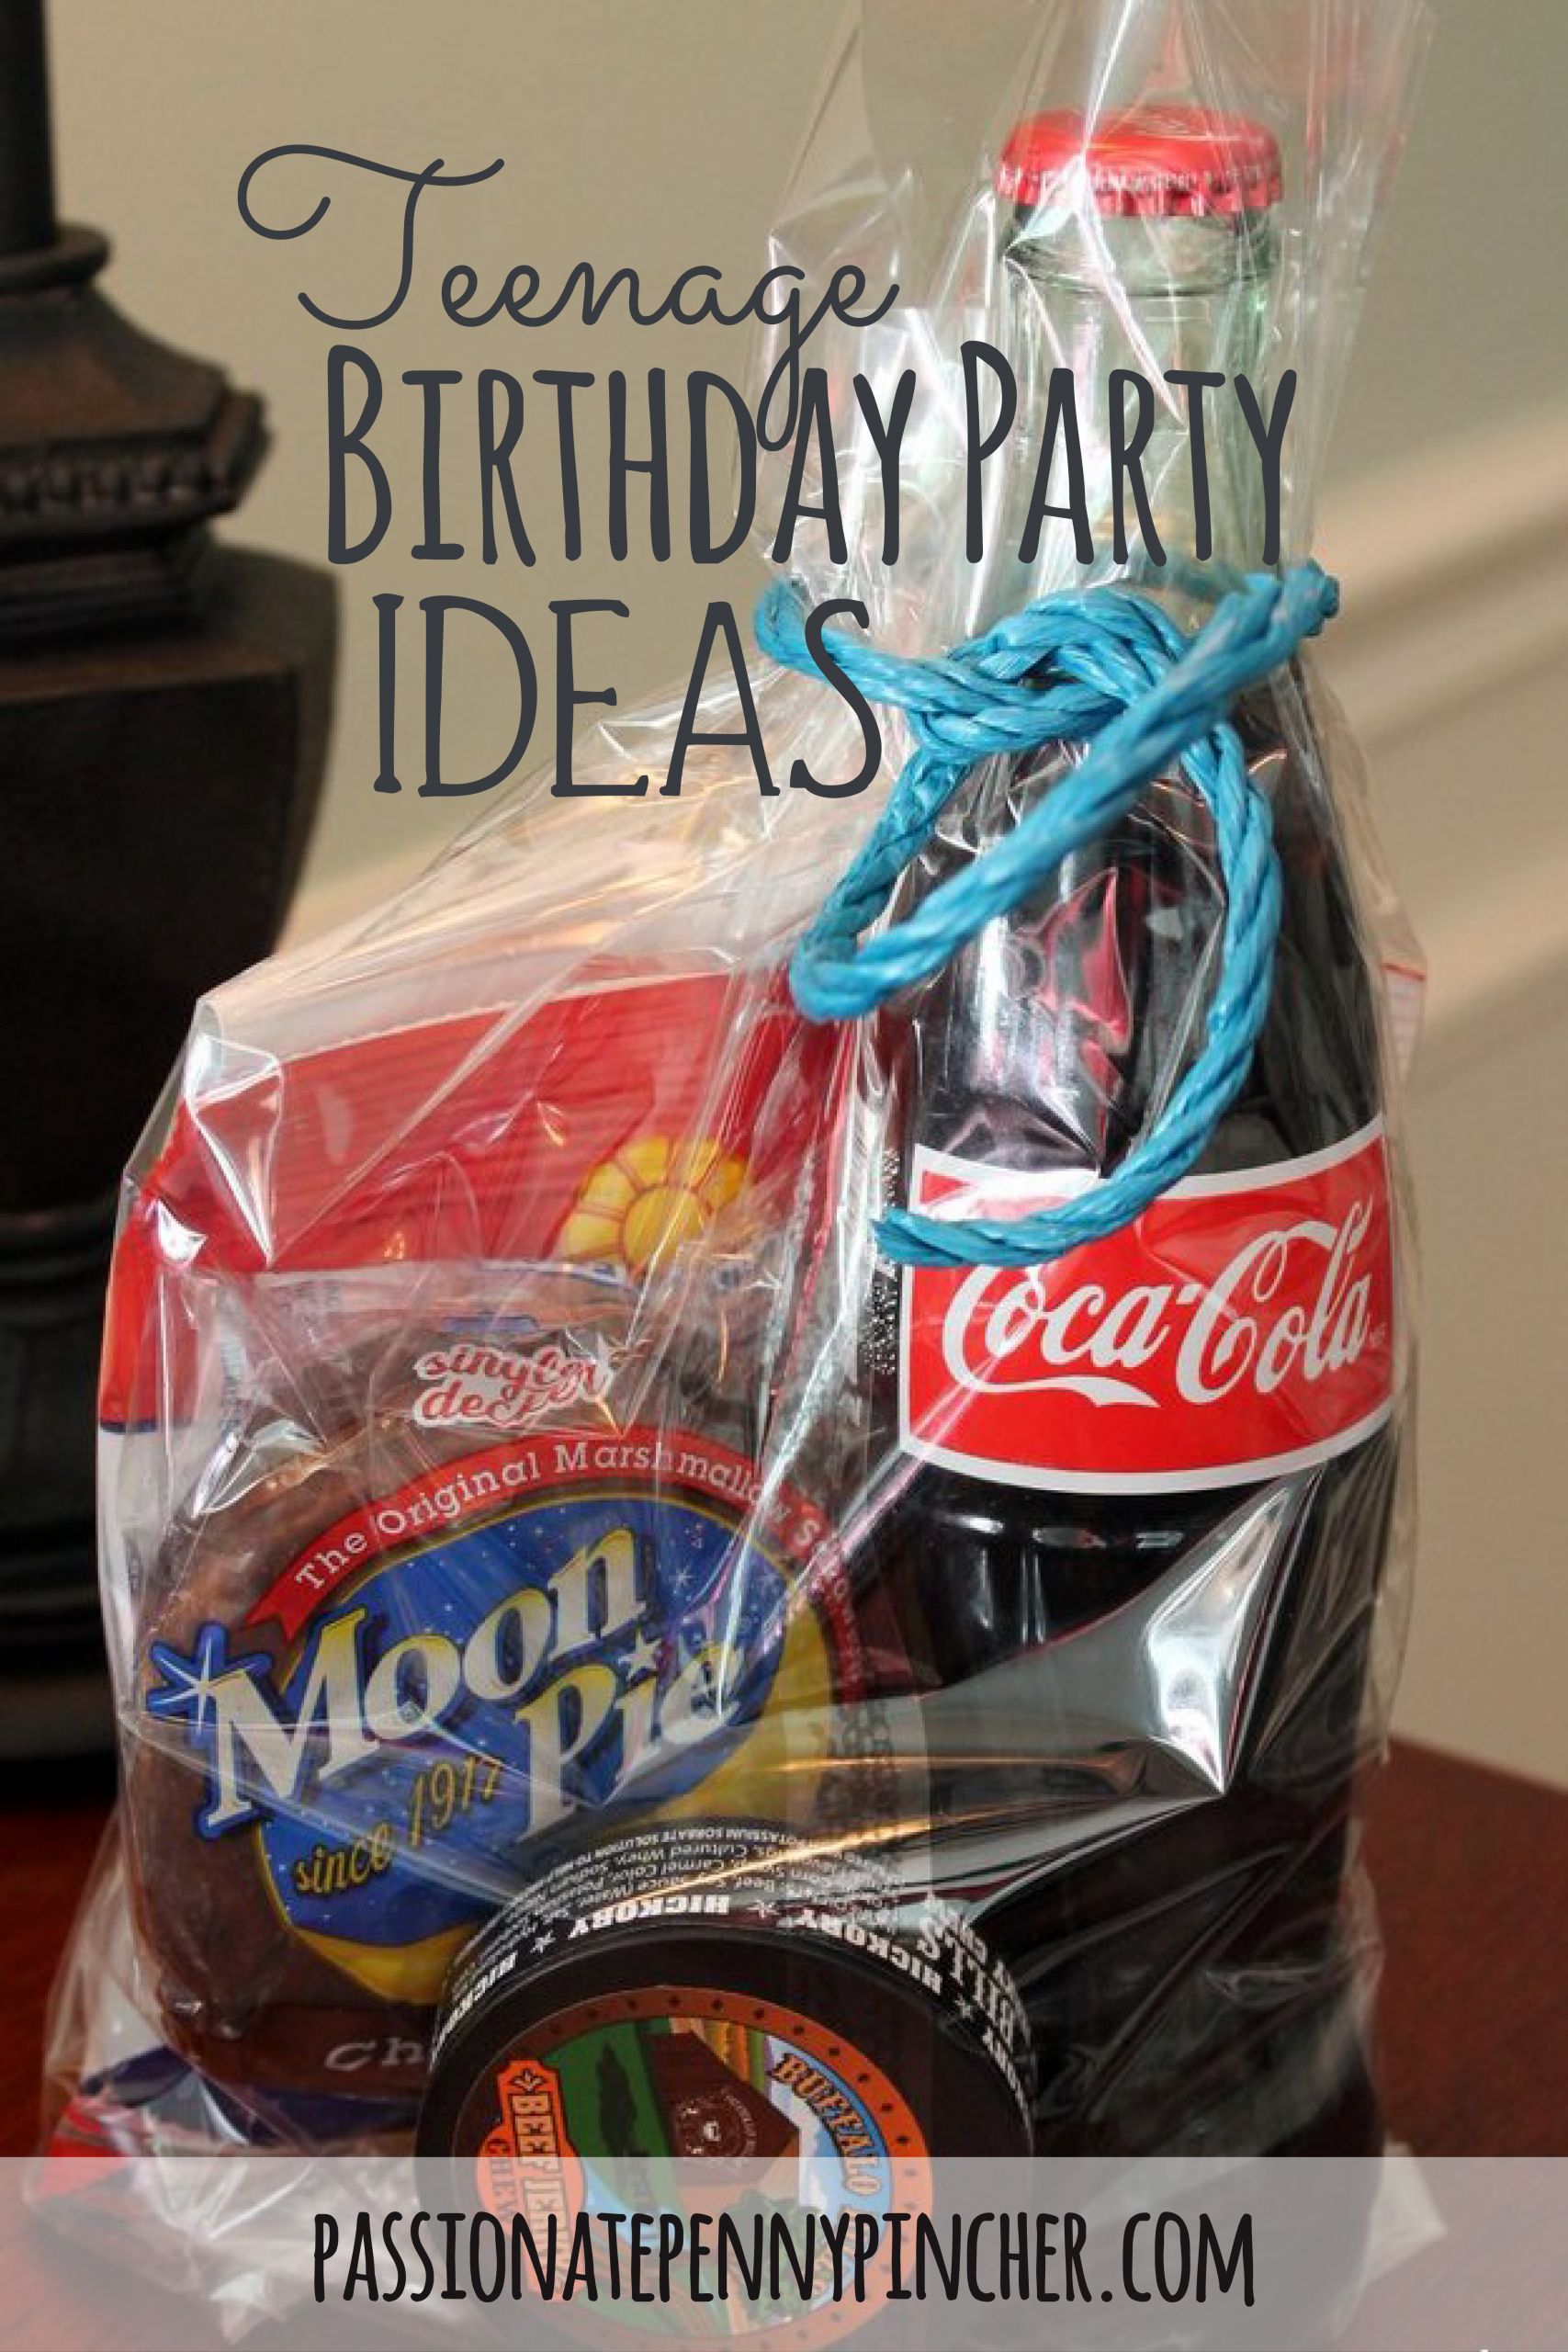 Birthday Gift Ideas For Teen Boys
 Teenage Boy Birthday Party Ideas Passionate Penny Pincher